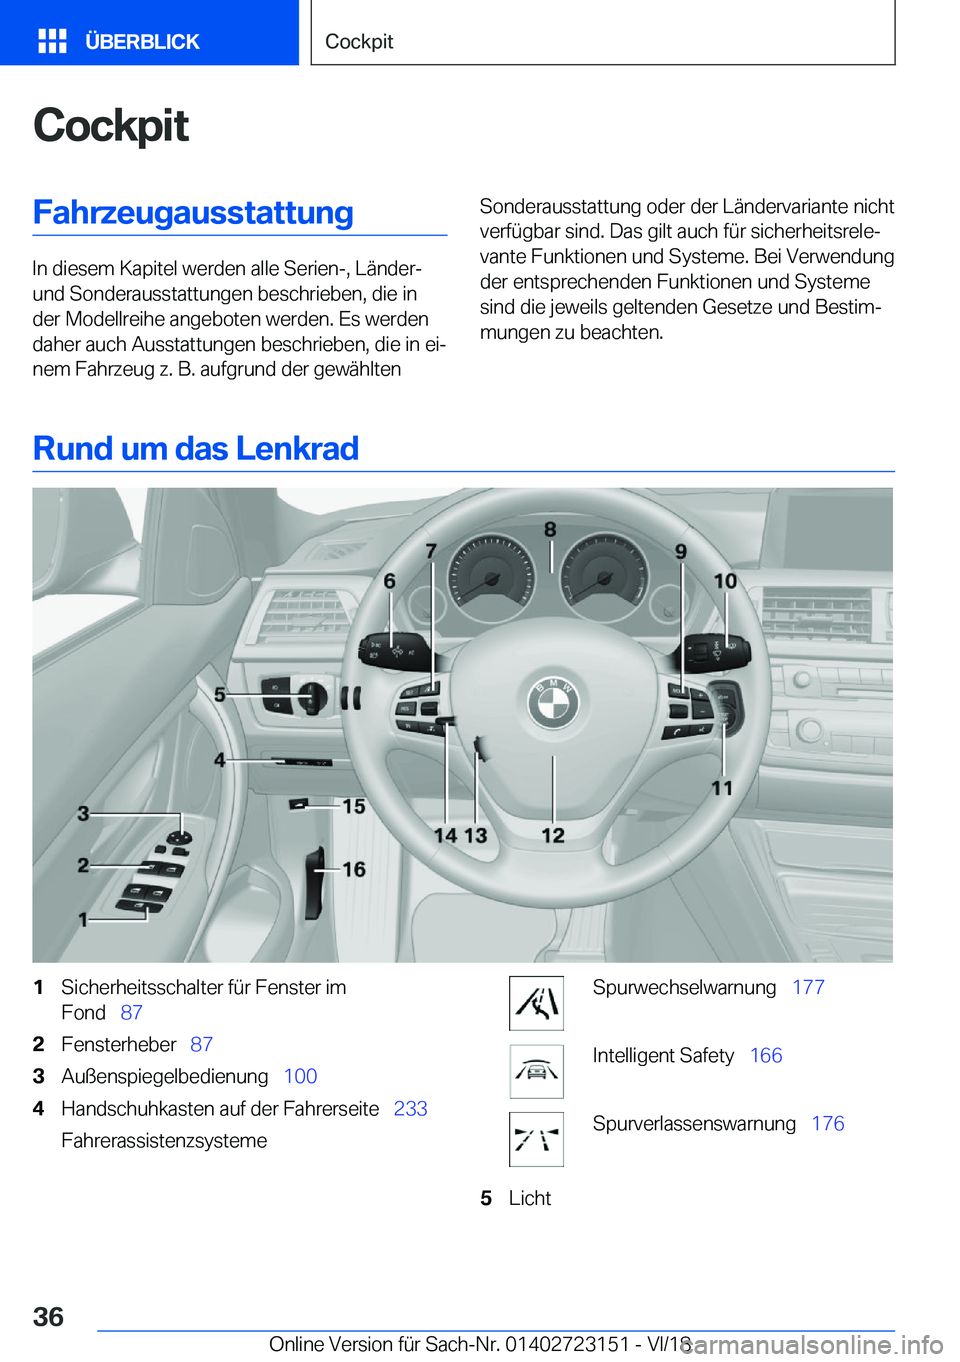 BMW 4 SERIES GRAN COUPE 2019  Betriebsanleitungen (in German) �C�o�c�k�p�i�t�F�a�h�r�z�e�u�g�a�u�s�s�t�a�t�t�u�n�g
�I�n��d�i�e�s�e�m��K�a�p�i�t�e�l��w�e�r�d�e�n��a�l�l�e��S�e�r�i�e�n�-�,��L�